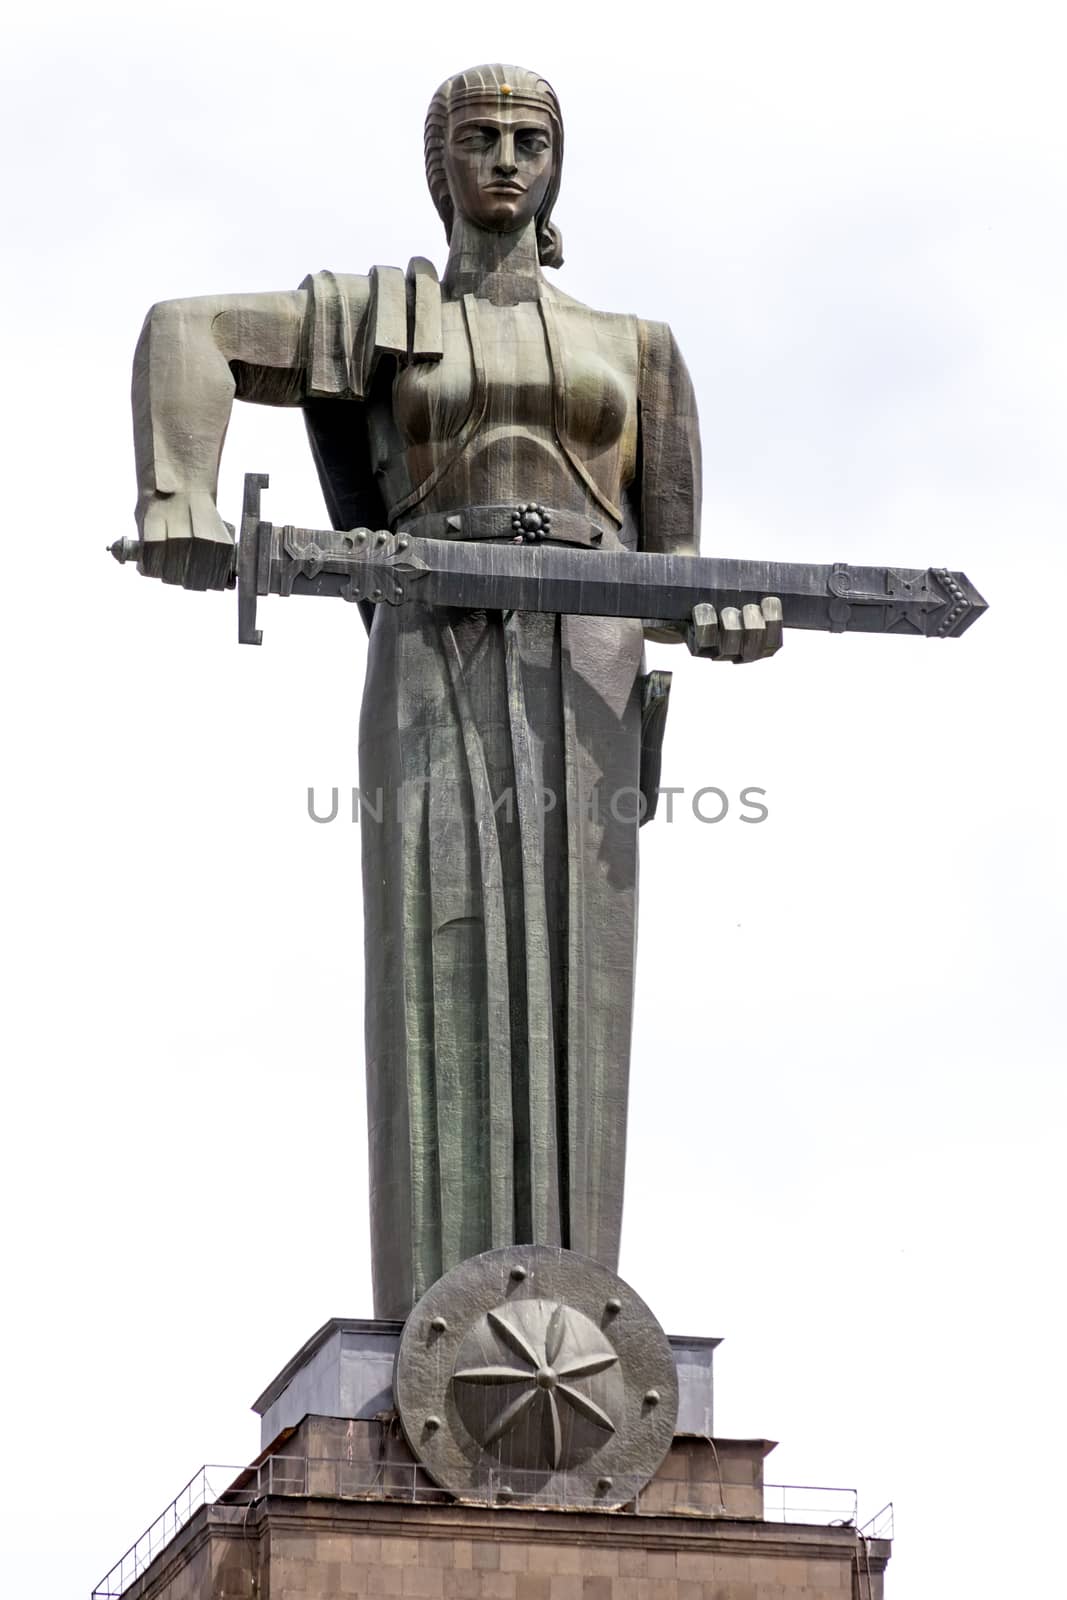 Mother Armenia Statue or Mayr hayastan. Monument located in Victory Park, Yerevan city, Armenia.